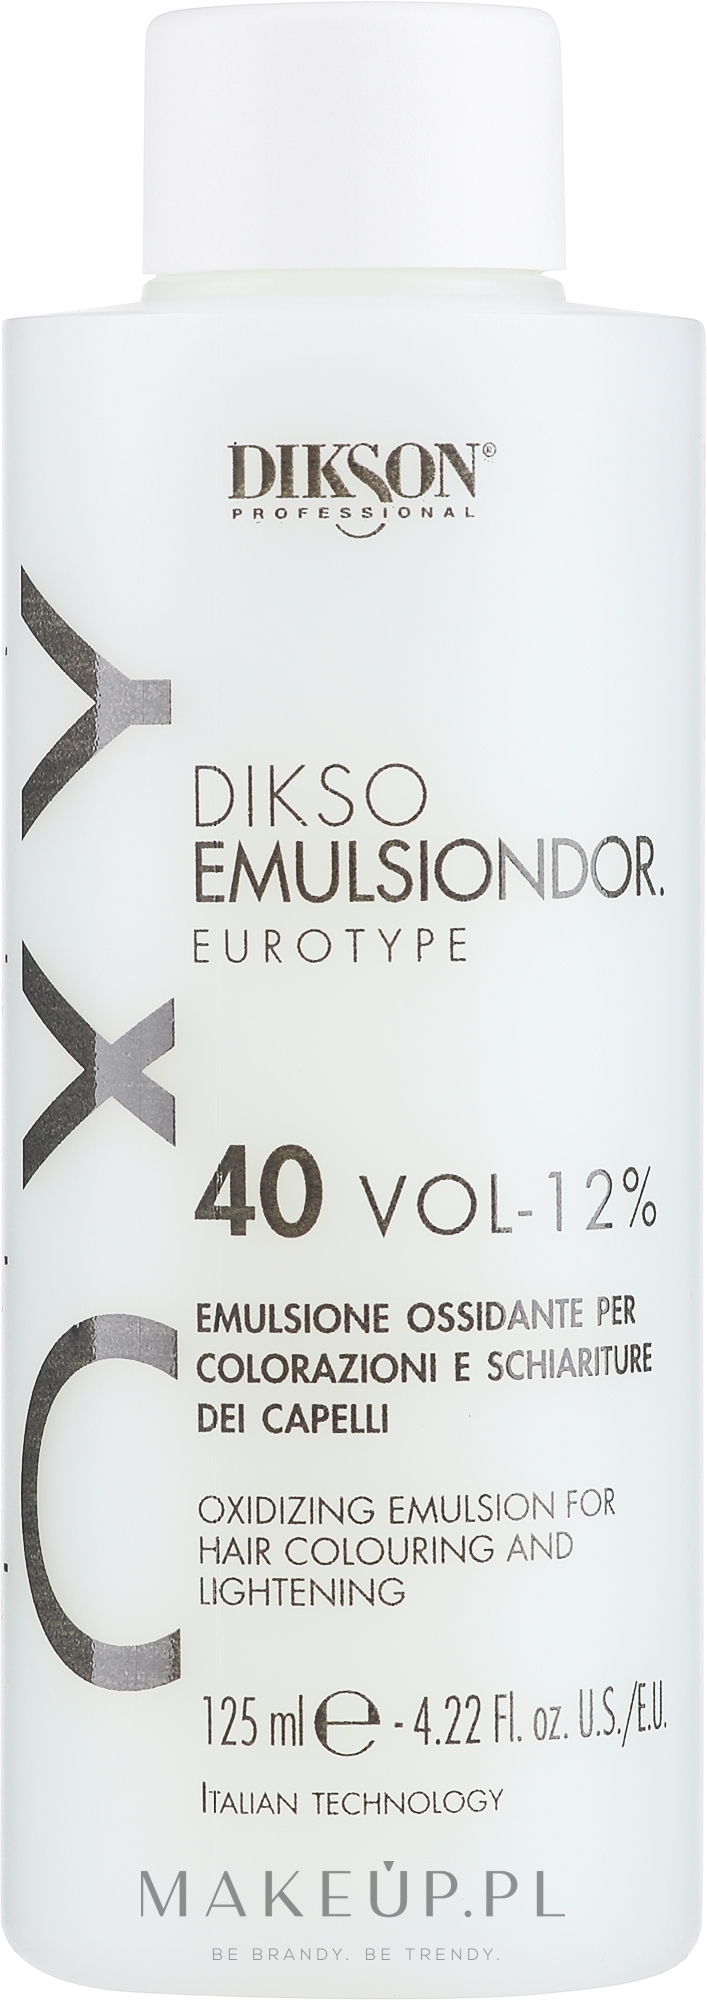 Oksykrem uniwersalny 12% - Dikson Tec Emulsiondor Eurotype 40 Volumi  — Zdjęcie 125 ml